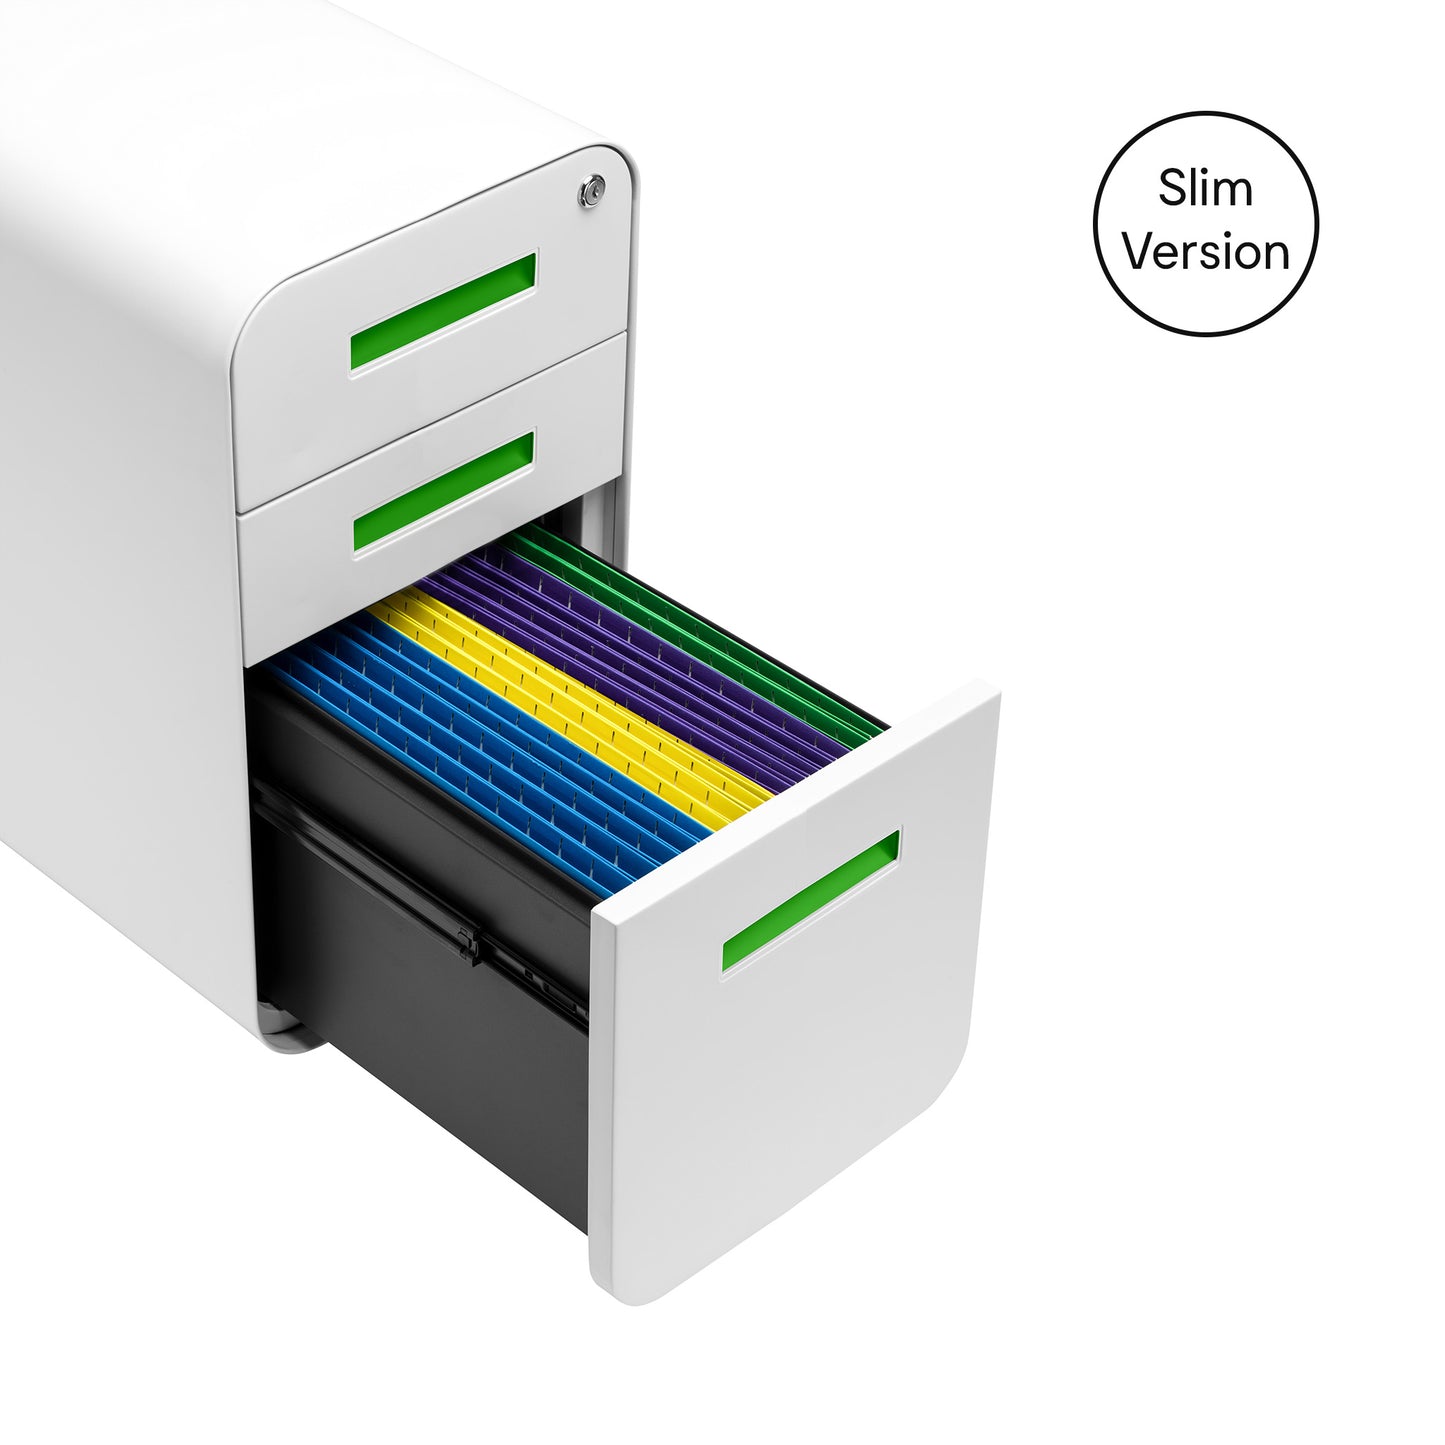 Stockpile Slim File Cabinet (White/Green)